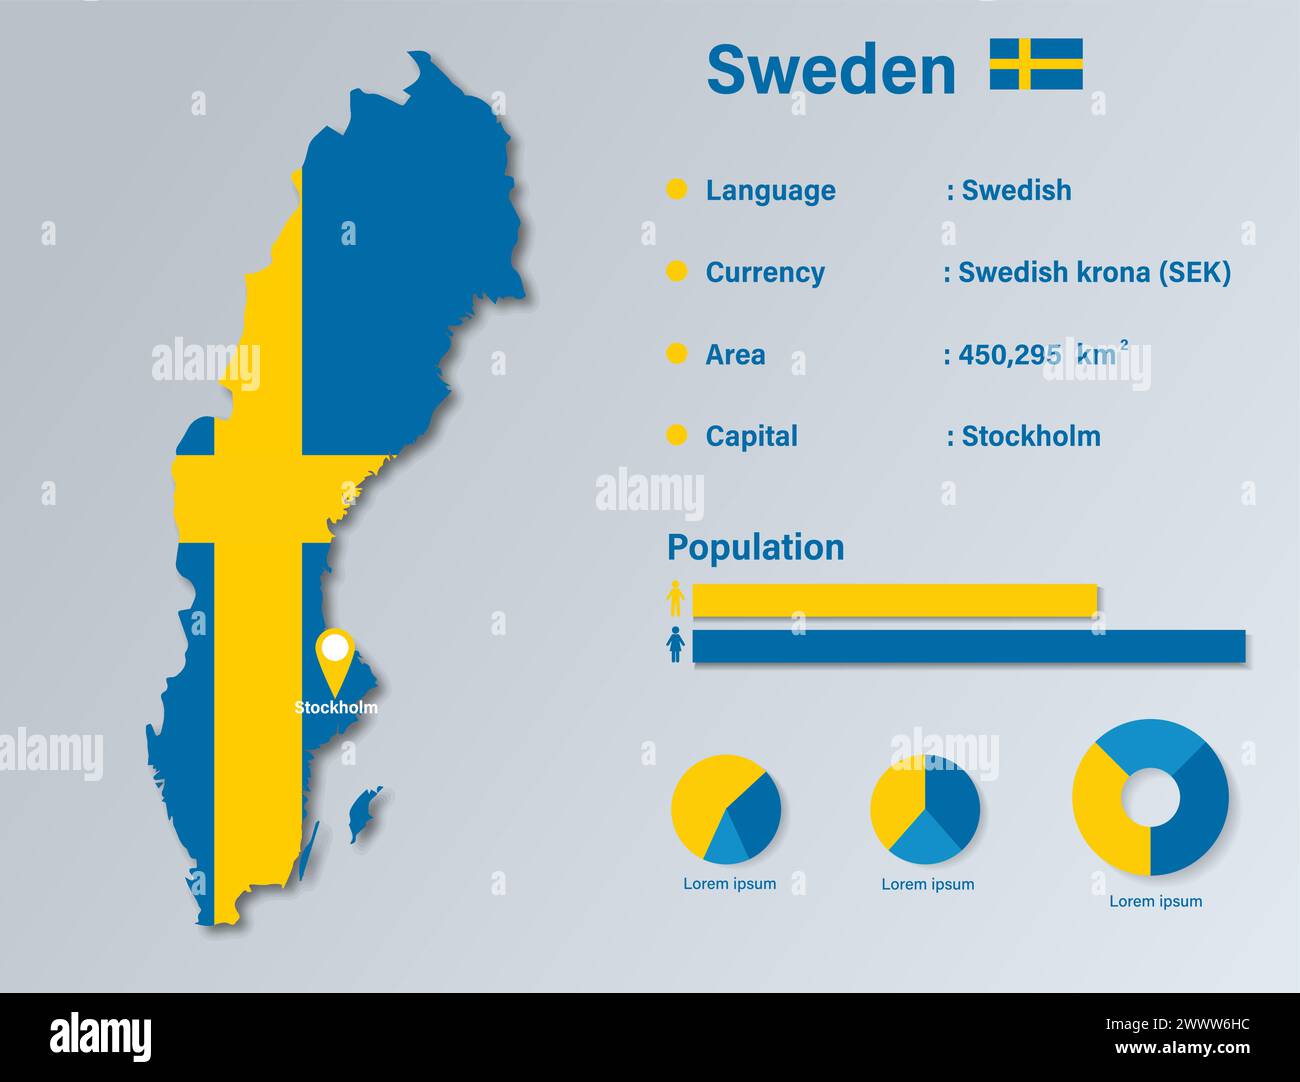 Svezia Infographic Vector Illustration, Sweden Statistical Data Element, Sweden Information Board with Flag Map, Swedia Map Flag Flat Design Illustrazione Vettoriale